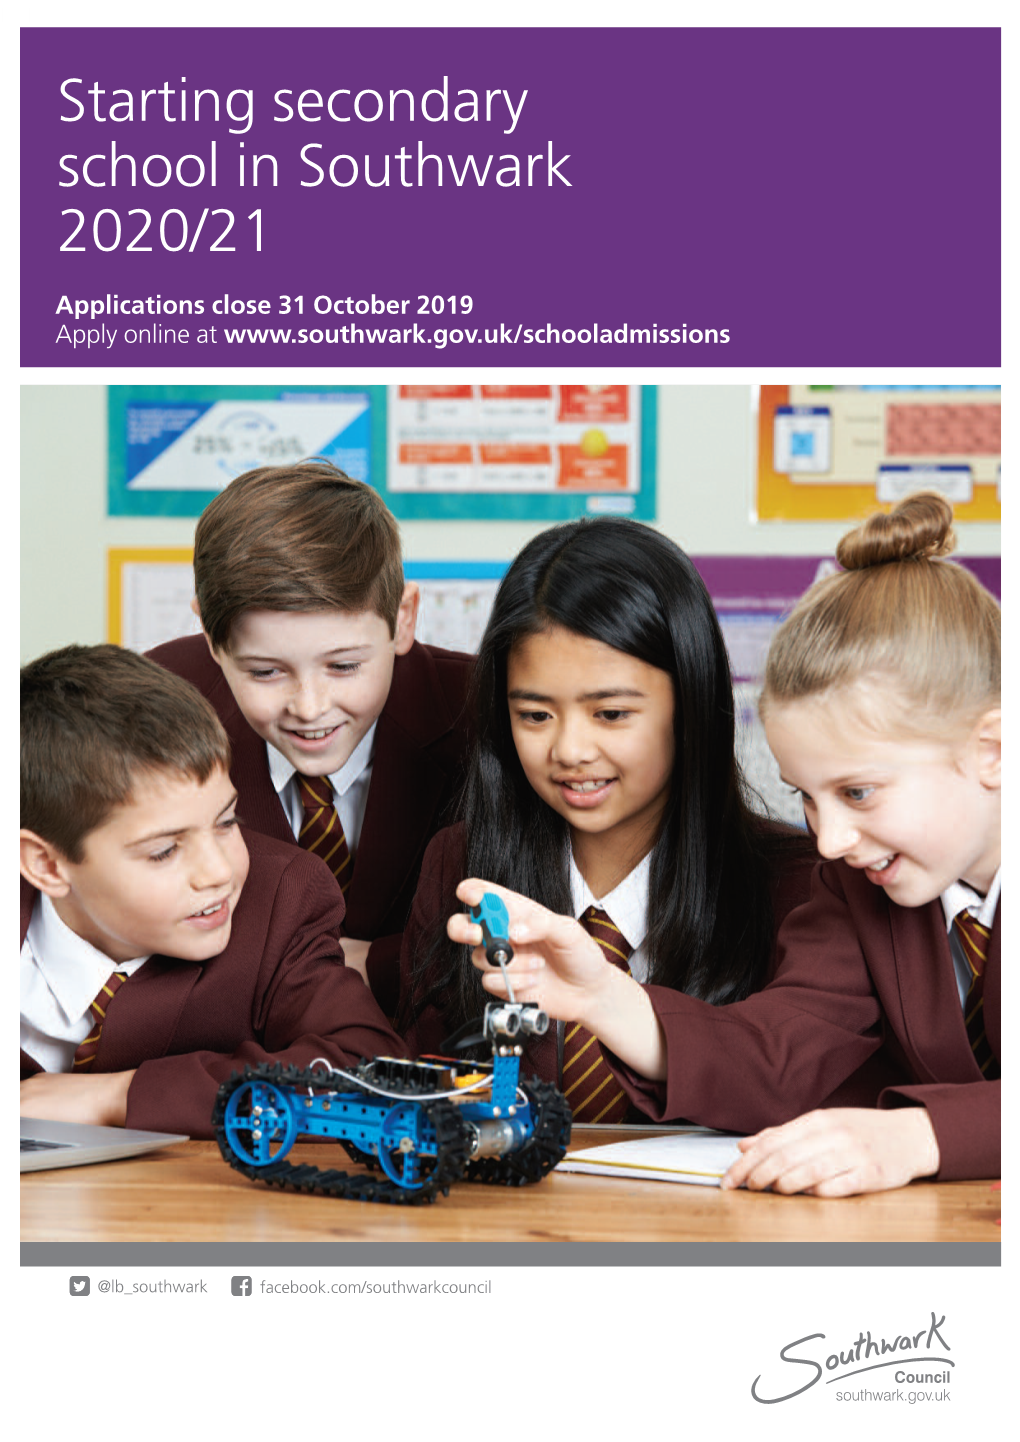 Starting Secondary School in Southwark 2020/21